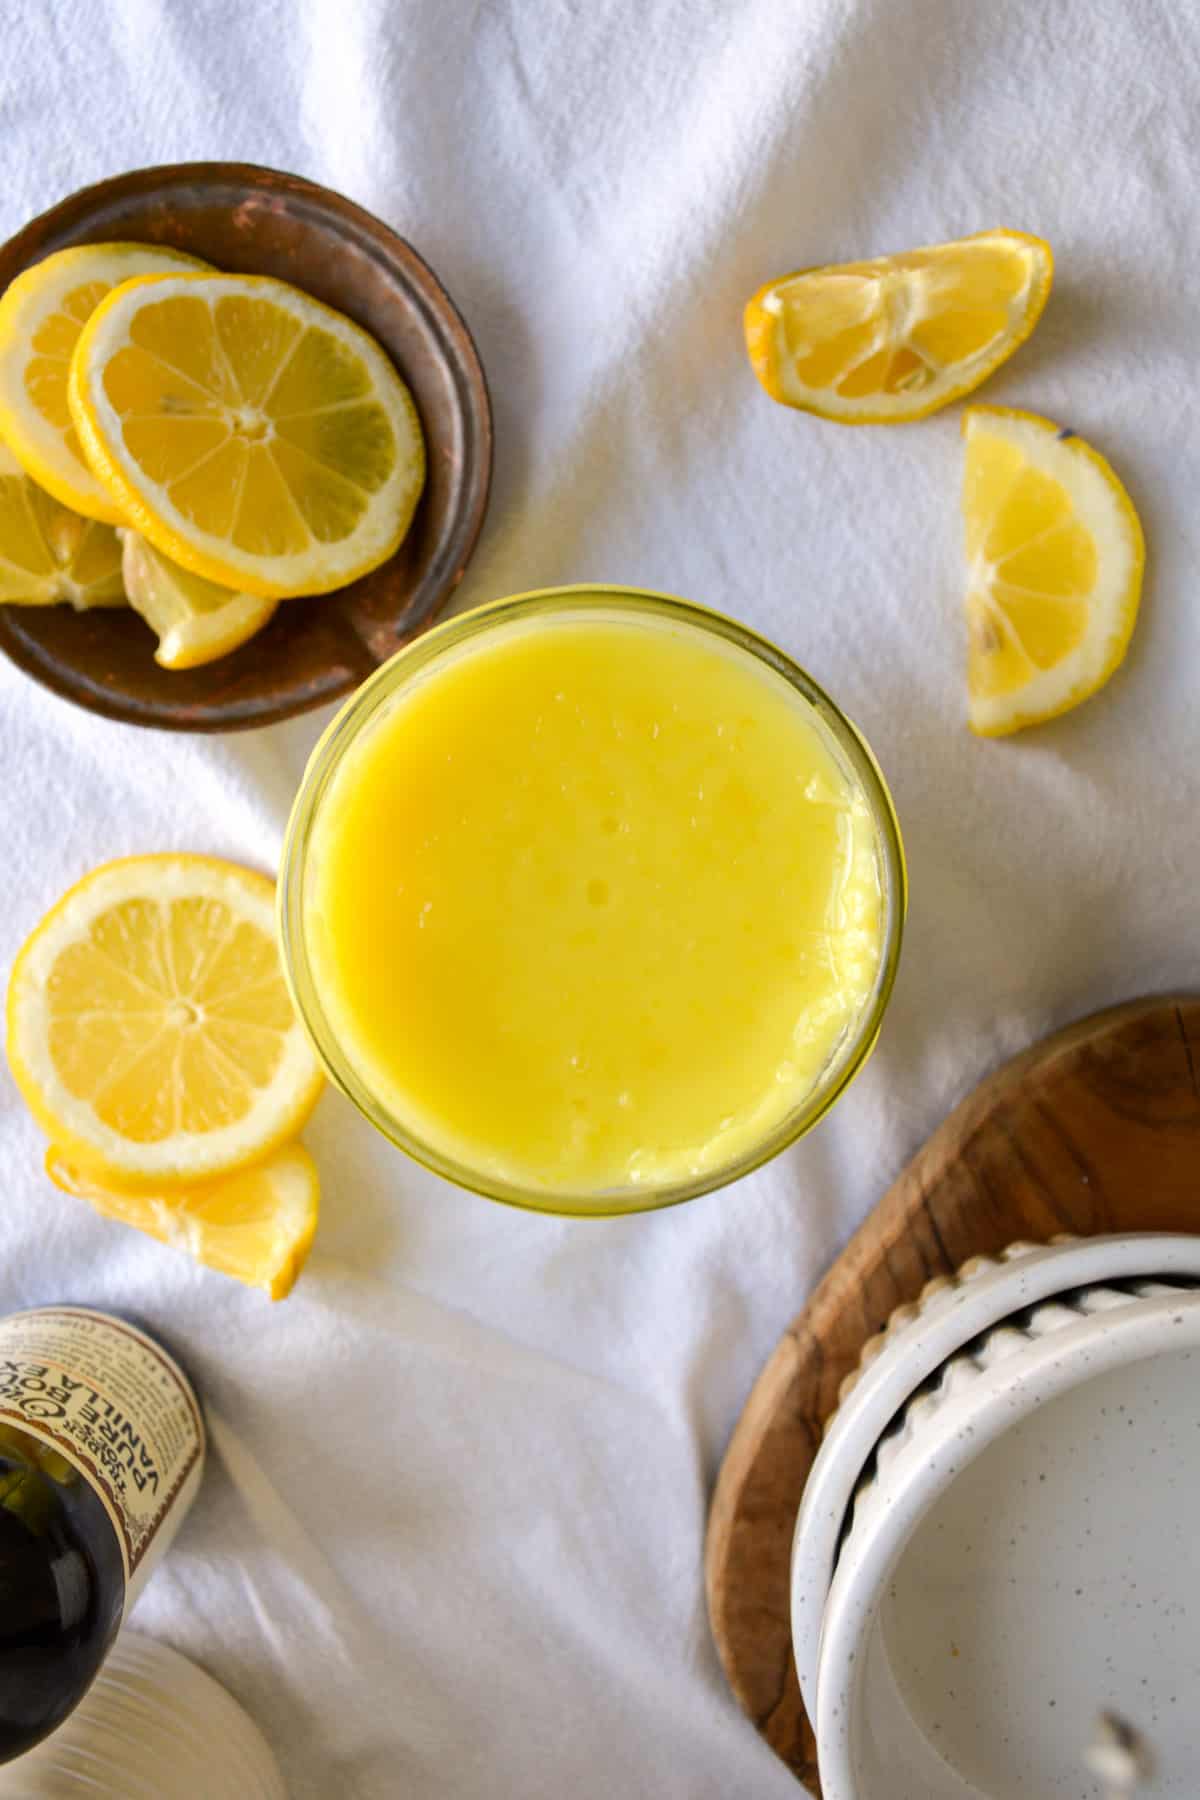 Cooled lemon curd in a glass jar.